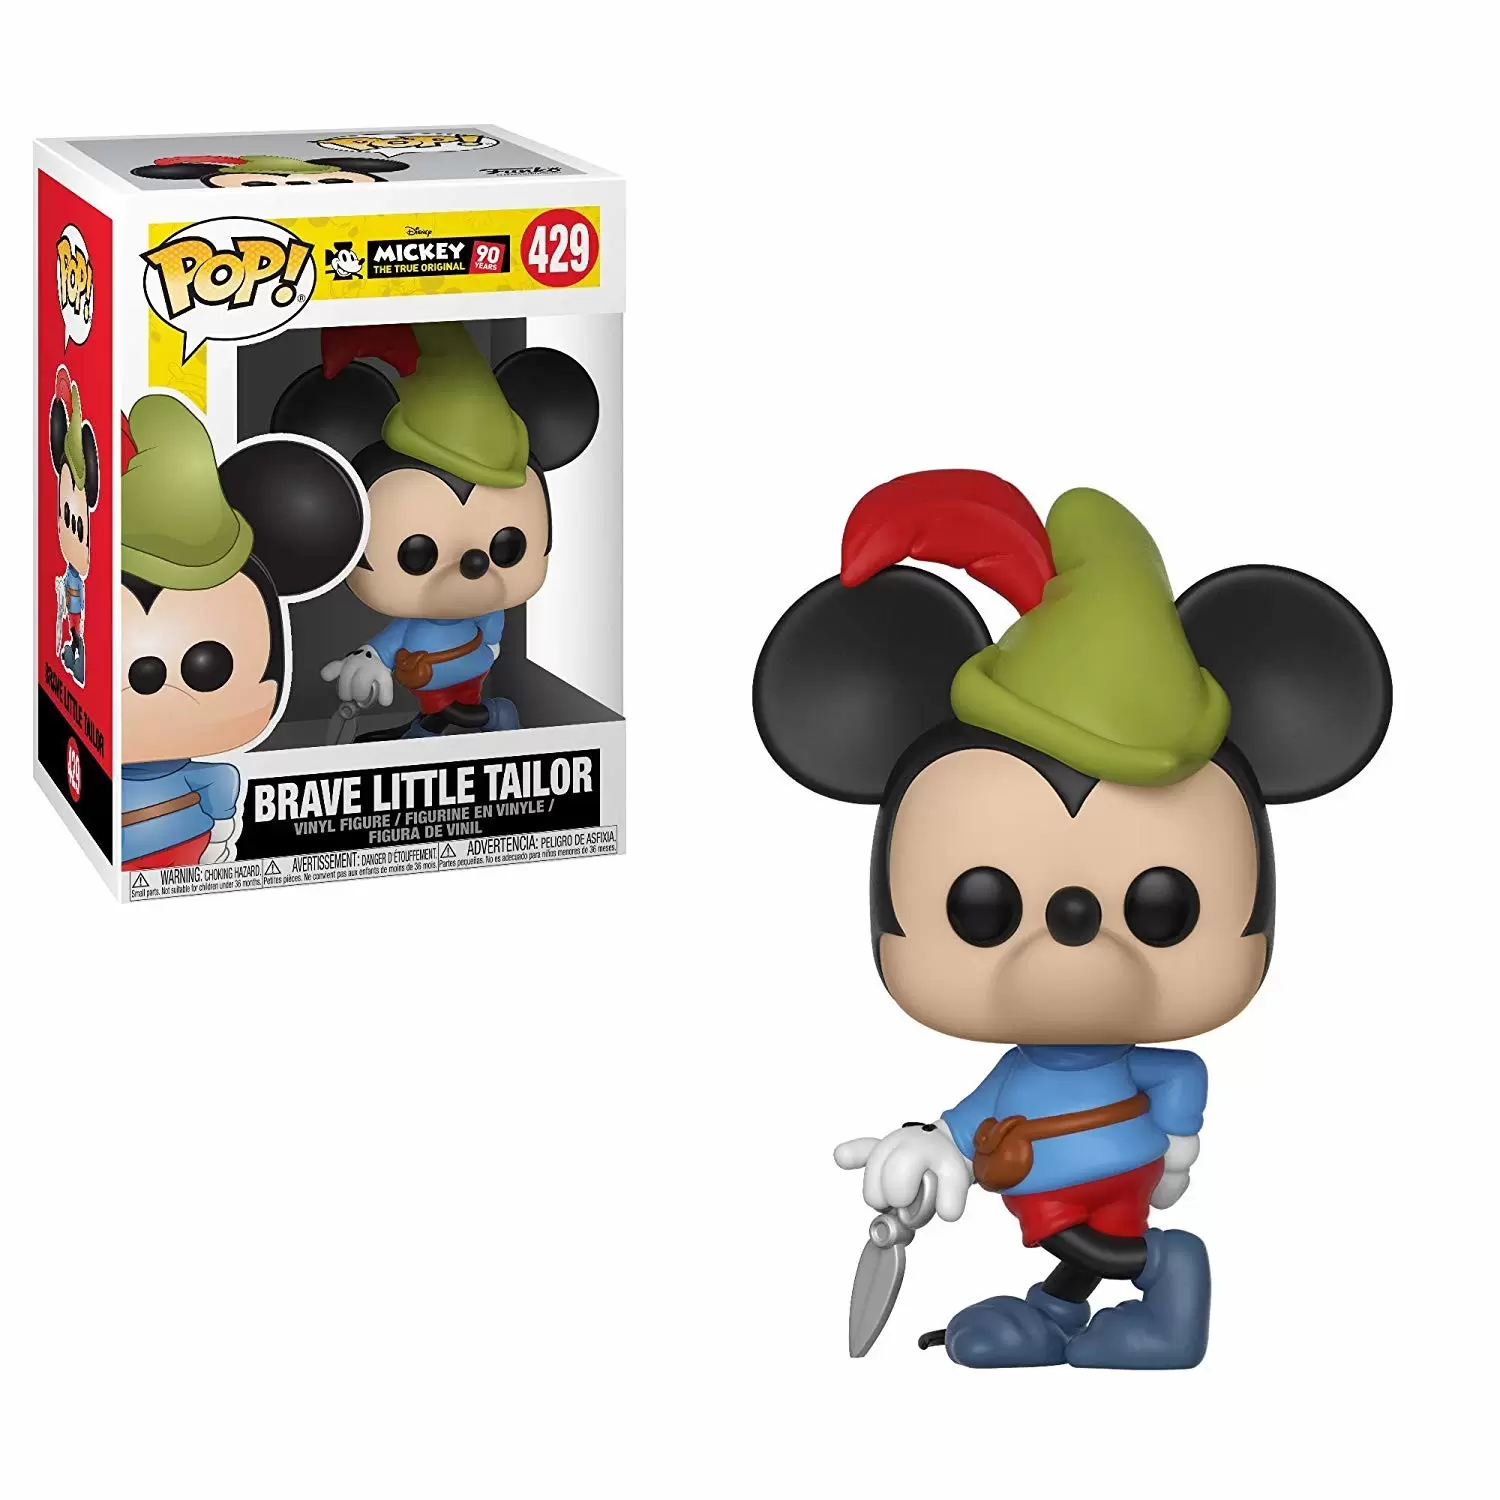 POP! Disney - Mickey 90th Anniversary - Brave Little Tailor